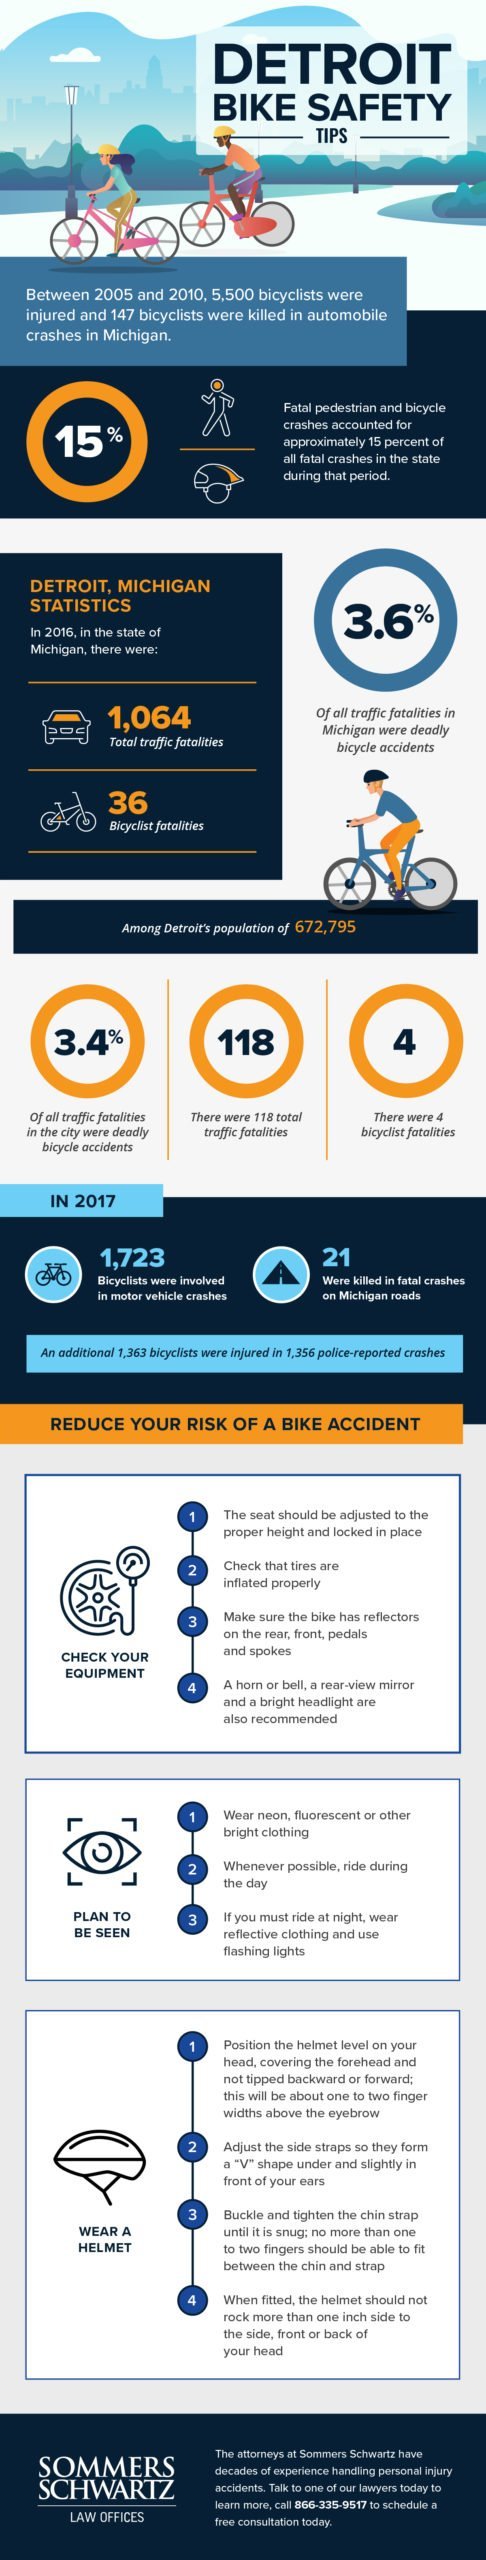 Detroit Bike Safety scaled